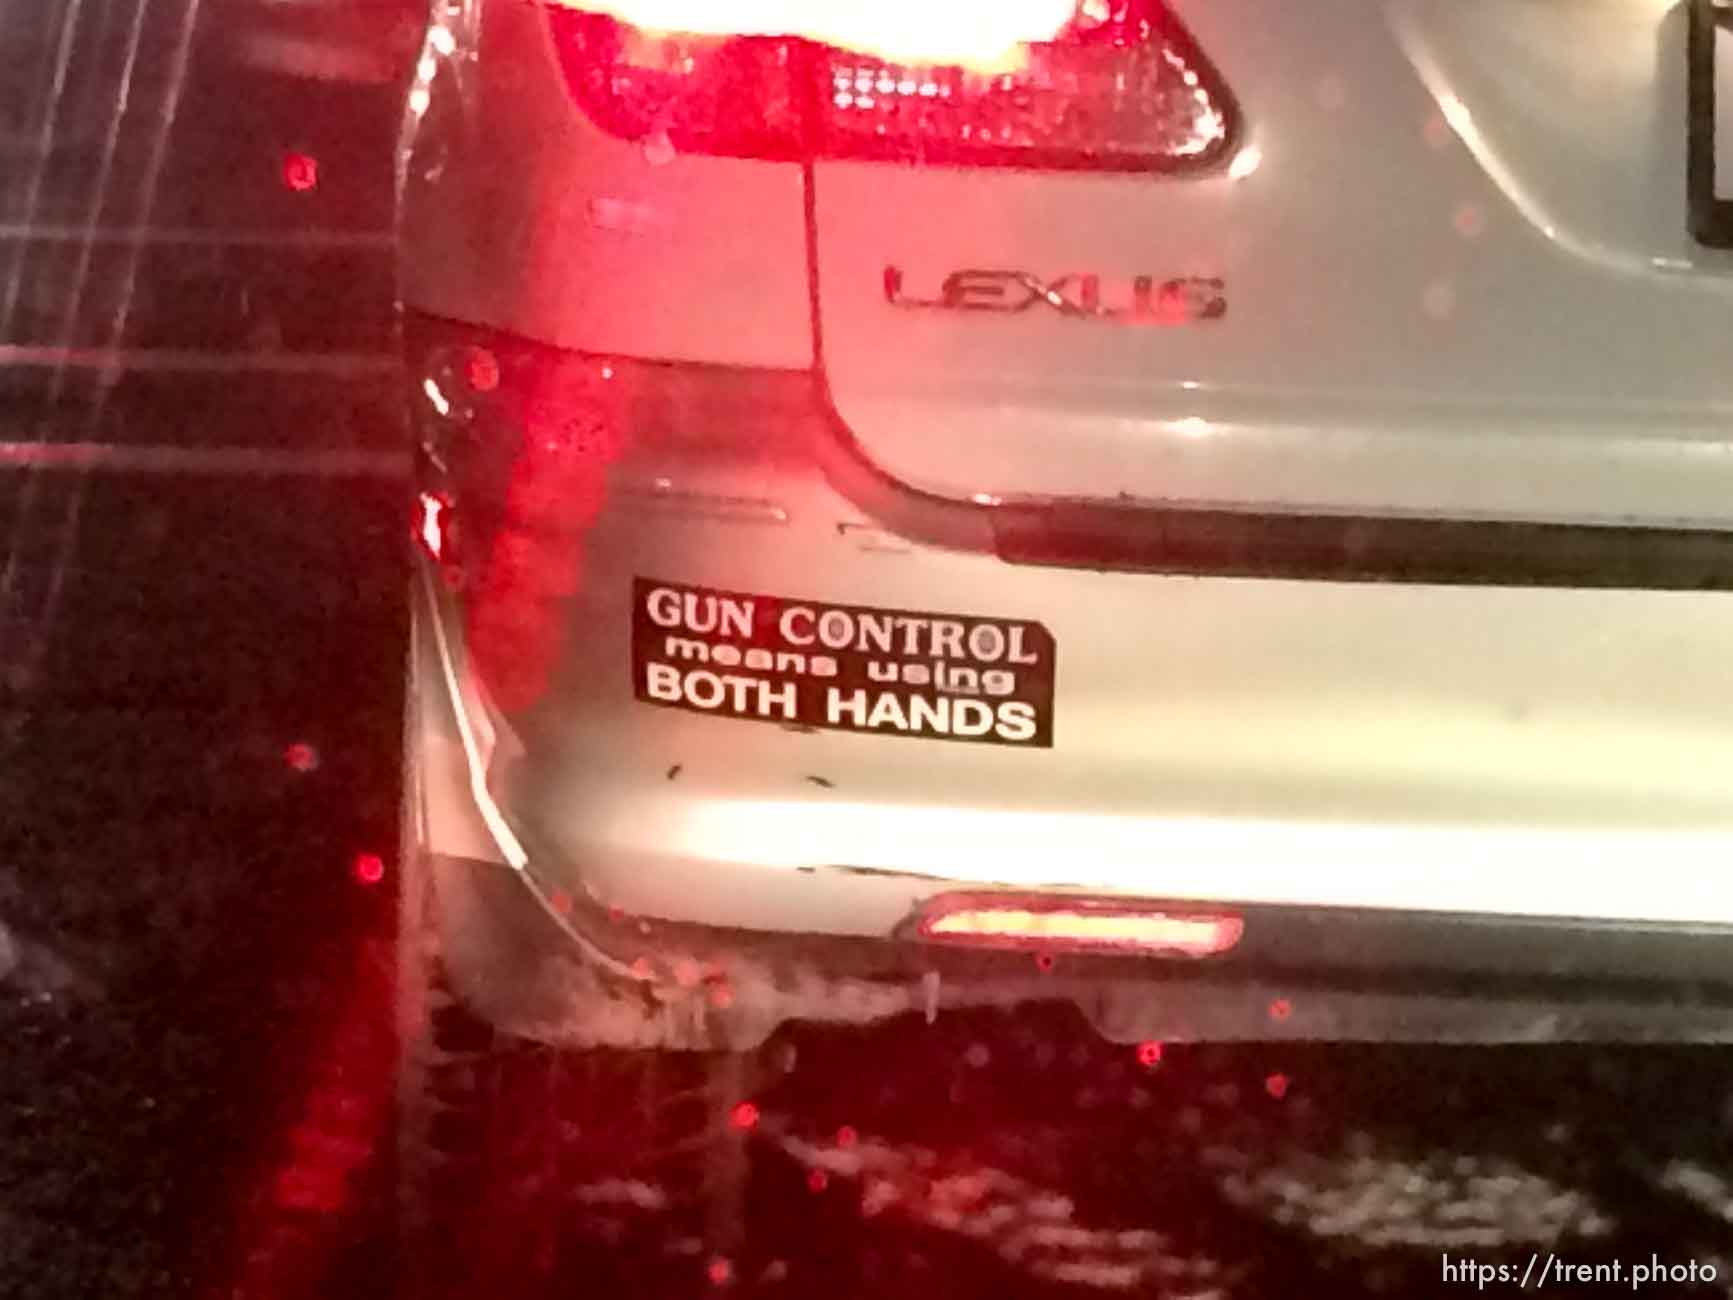 Gun Control mean using both hands